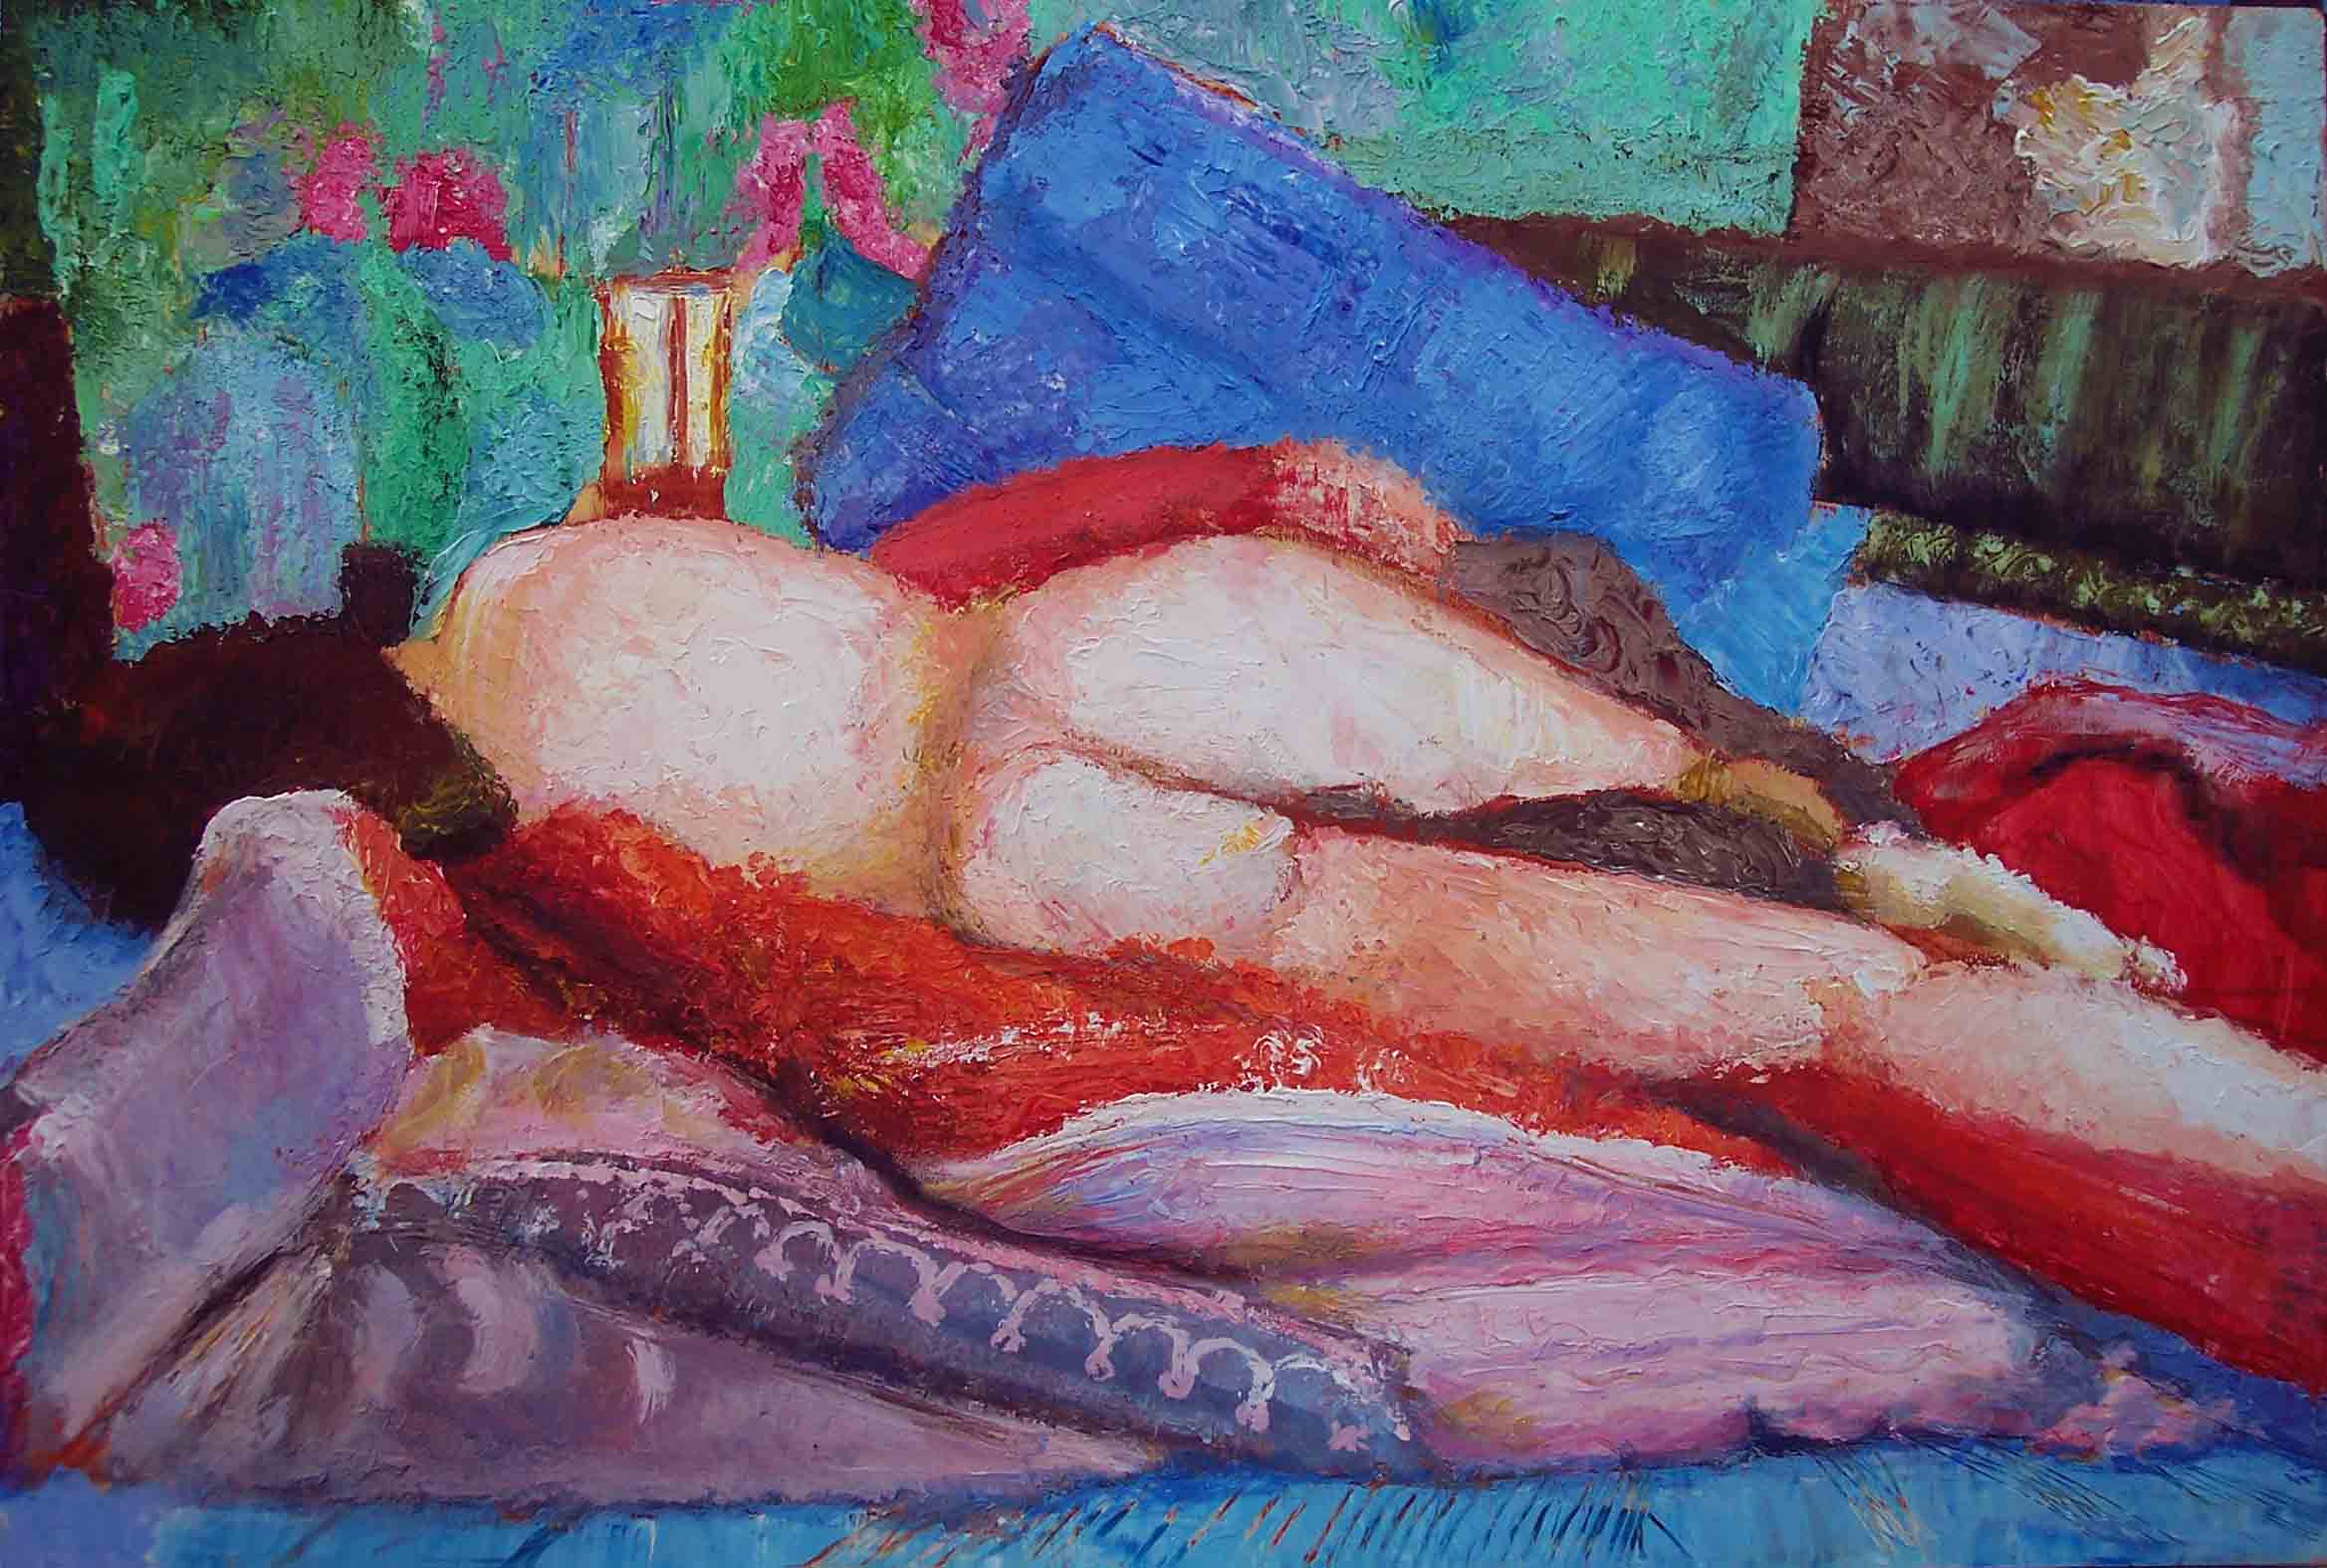 Fabio Modica | Sleeping woman - cm 70x100 | 27,5x39,4 inches - mixed media on table - 2007